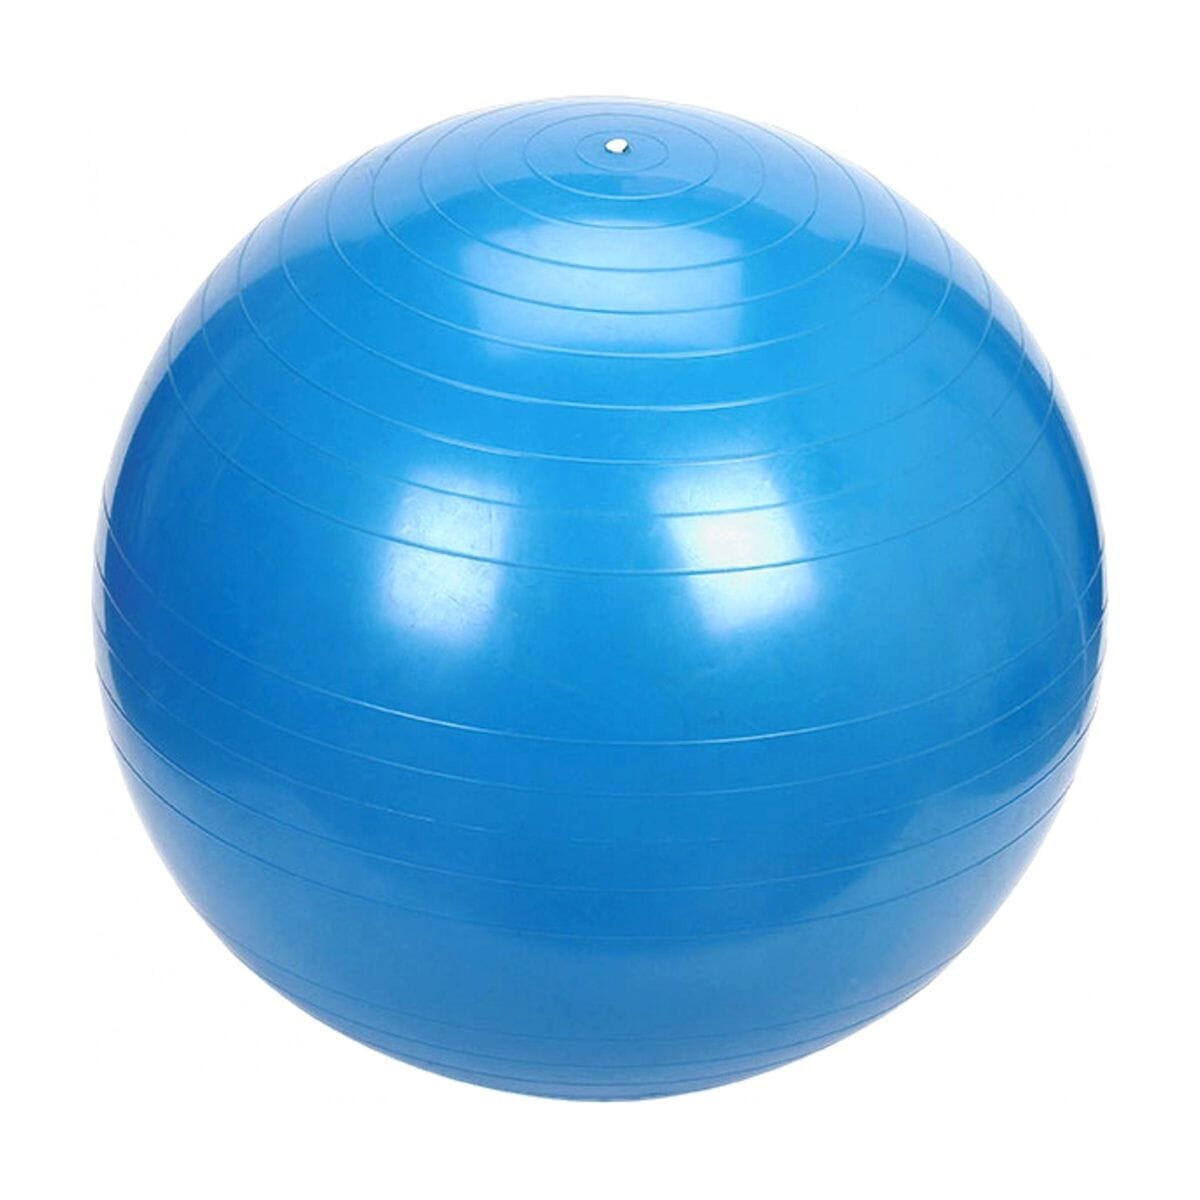 View Gym Balls Blue information